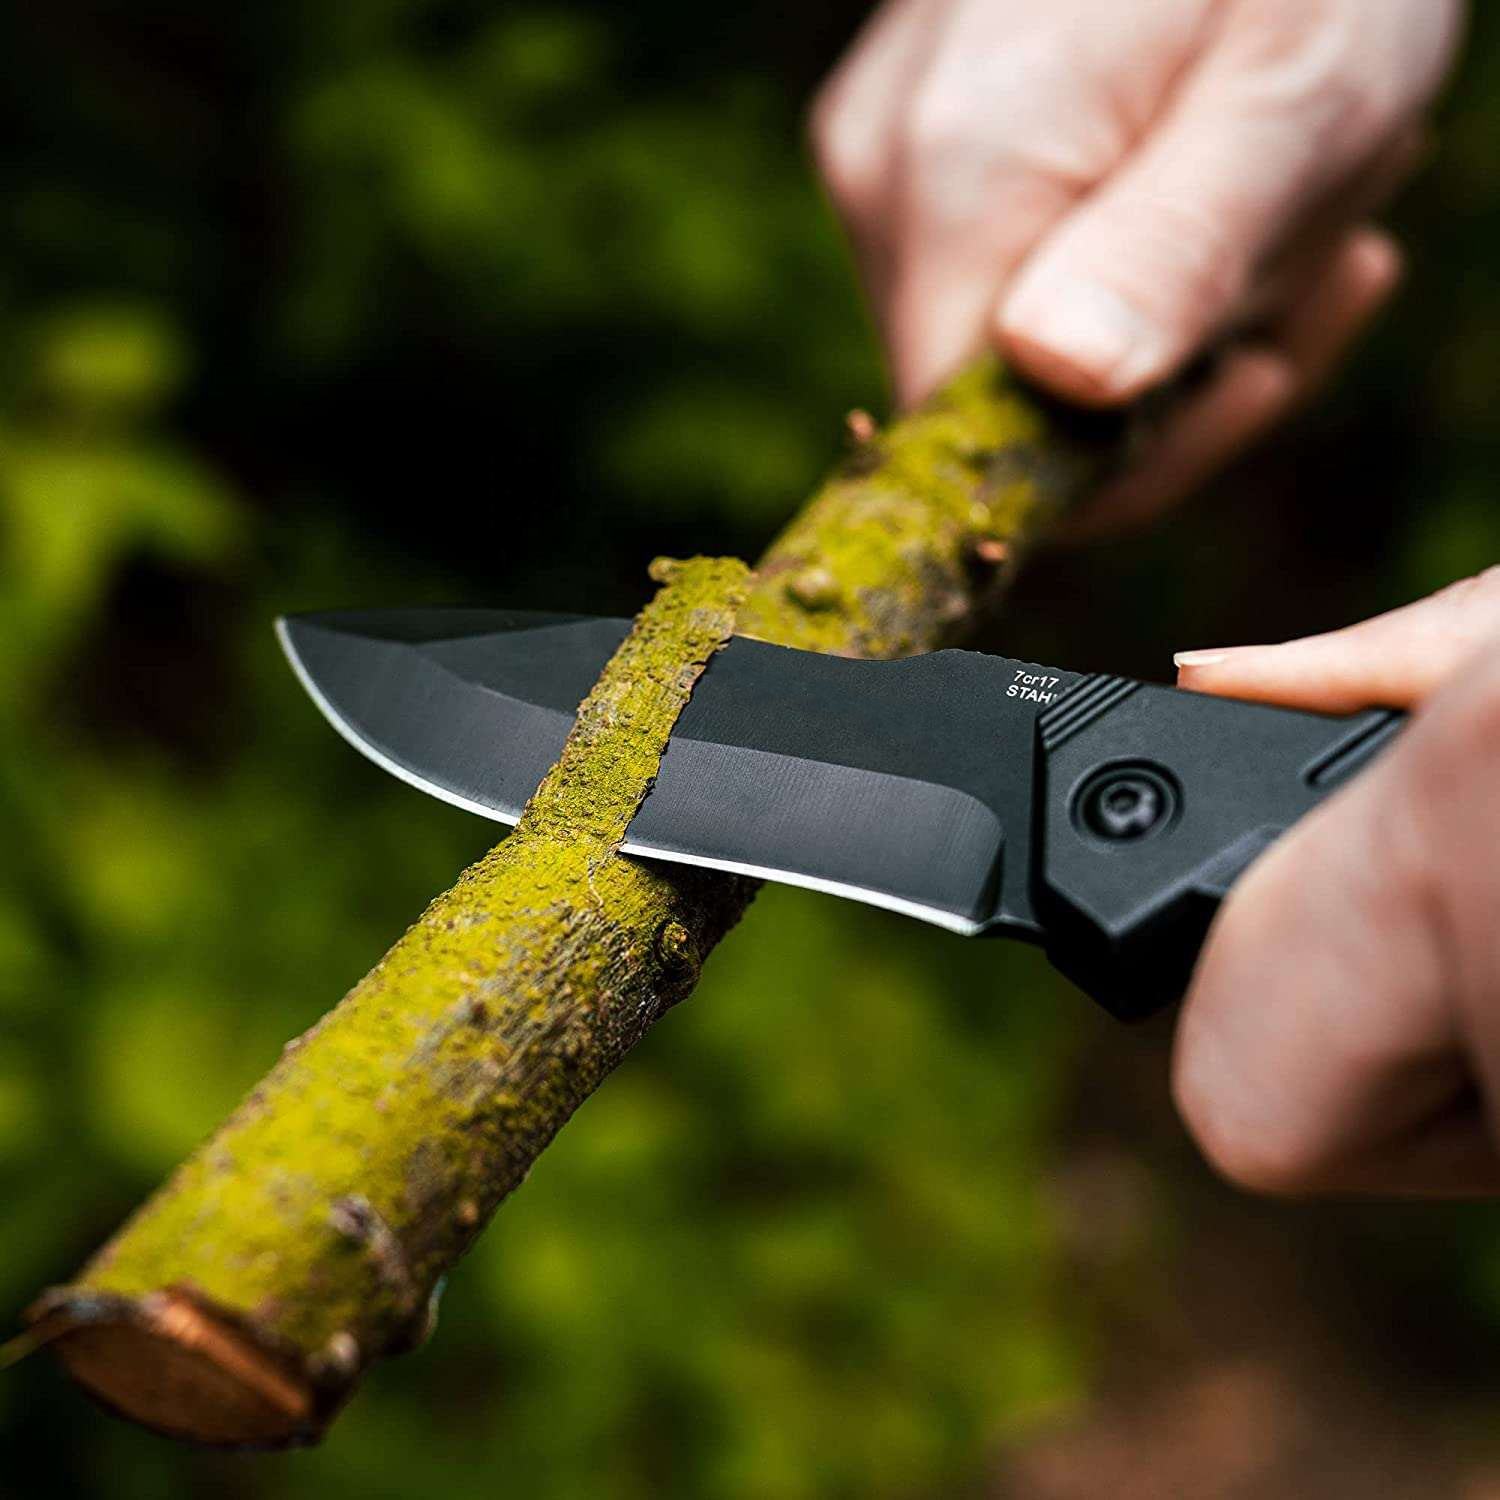 Folding Hunting Knife Survival Stainless Steel Pocket Knife Tactical Knife